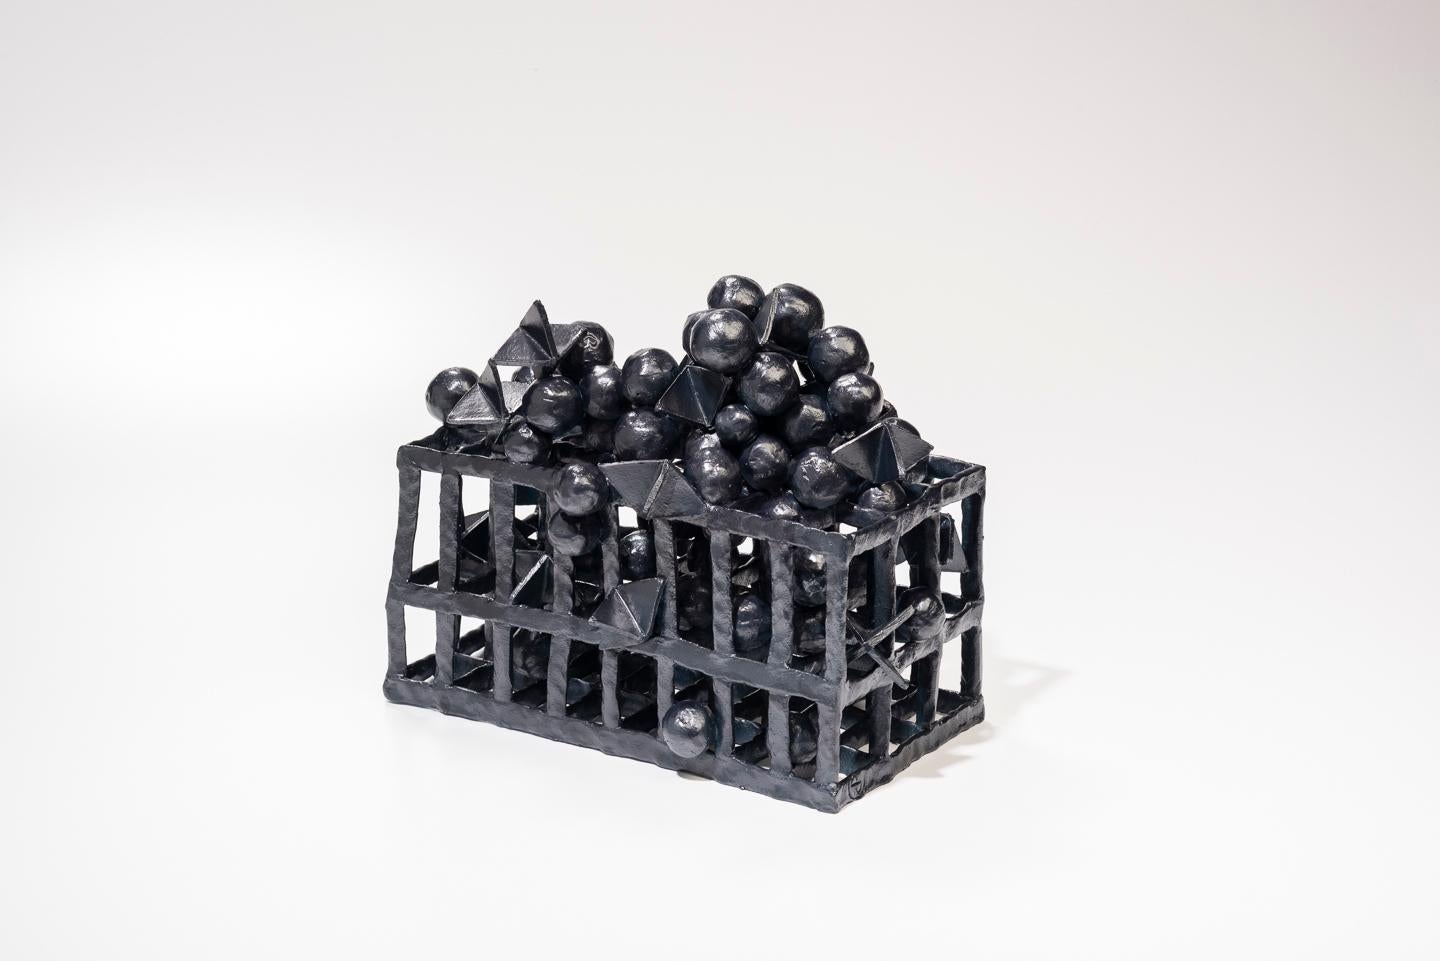 Organic Modern Joanna Poag Binding Time (Black Grid with Spheres) Ceramic Sculpture, 2019 For Sale